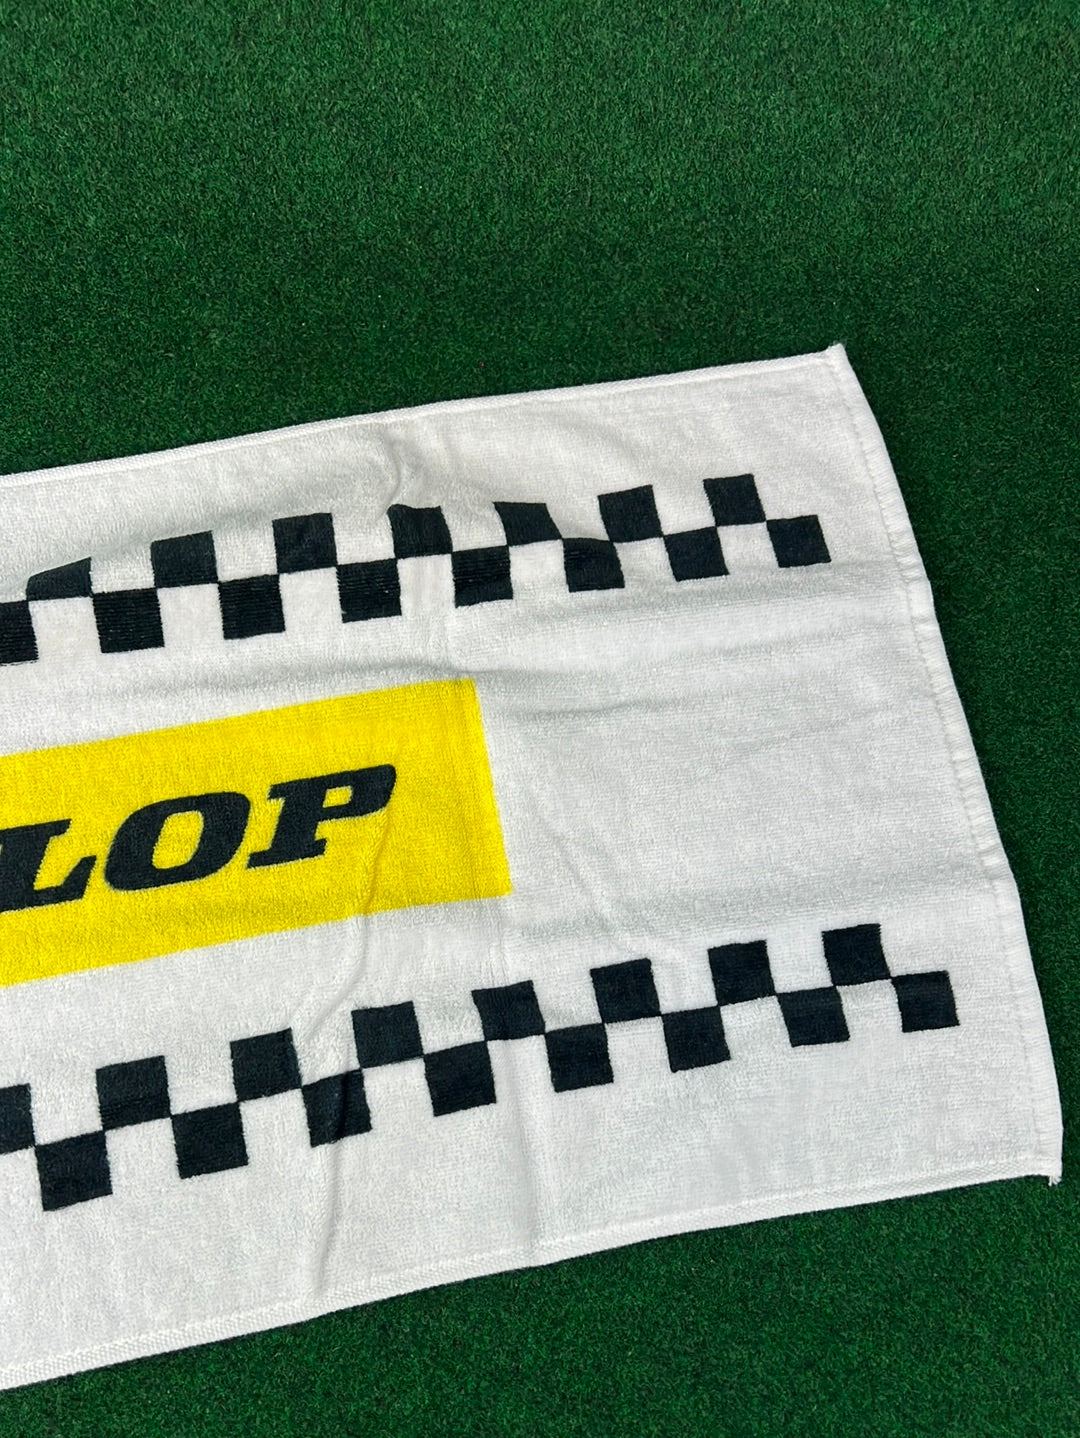 DUNLOP Tires - Logo Towel